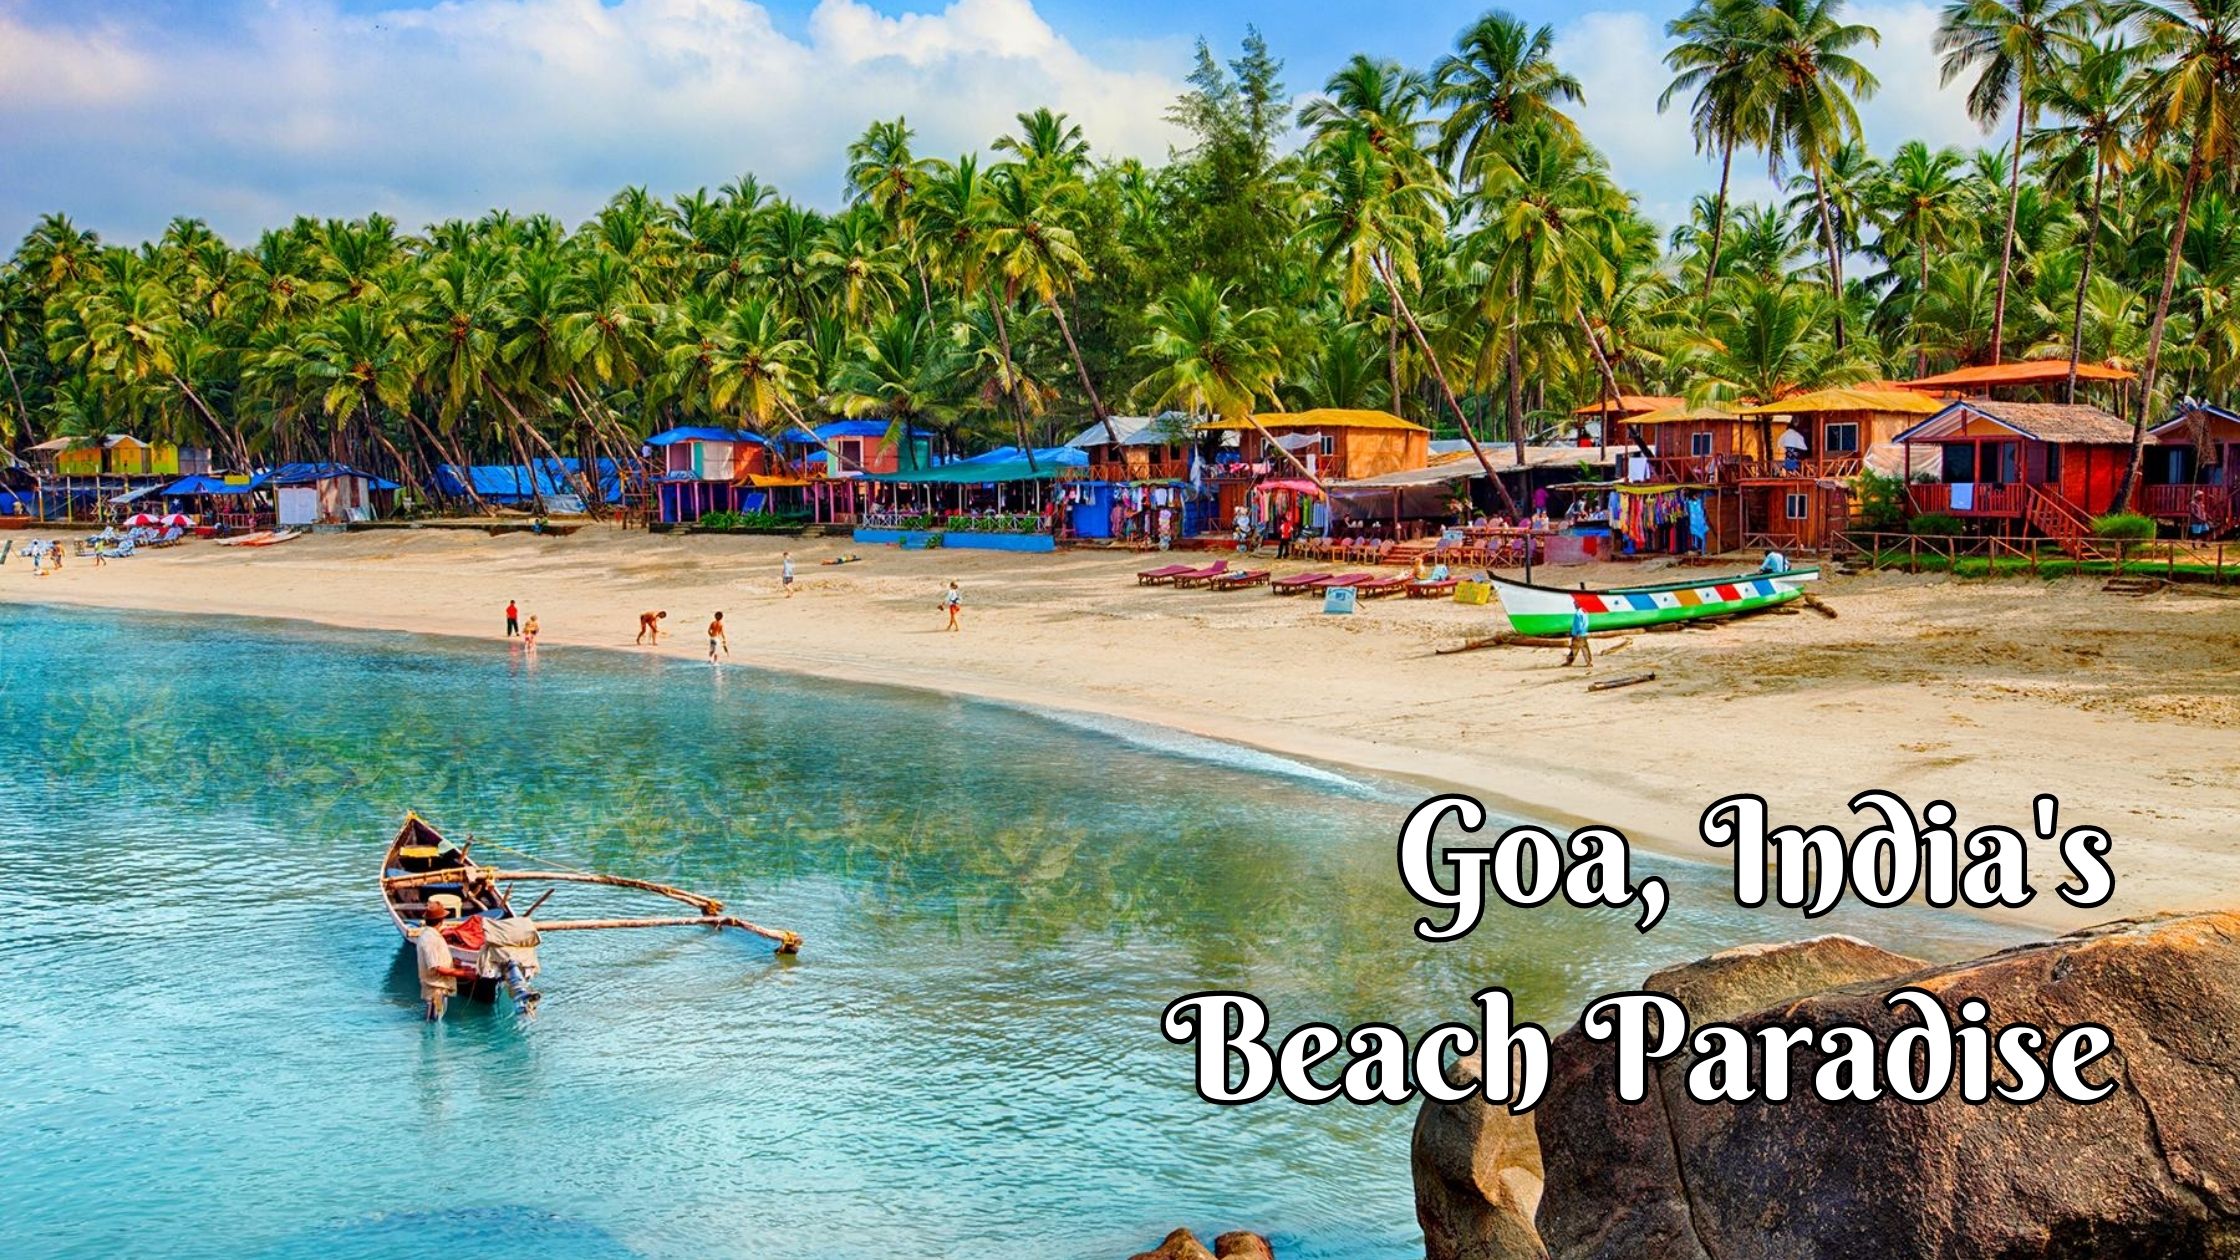 Goa, India's Beach Paradise